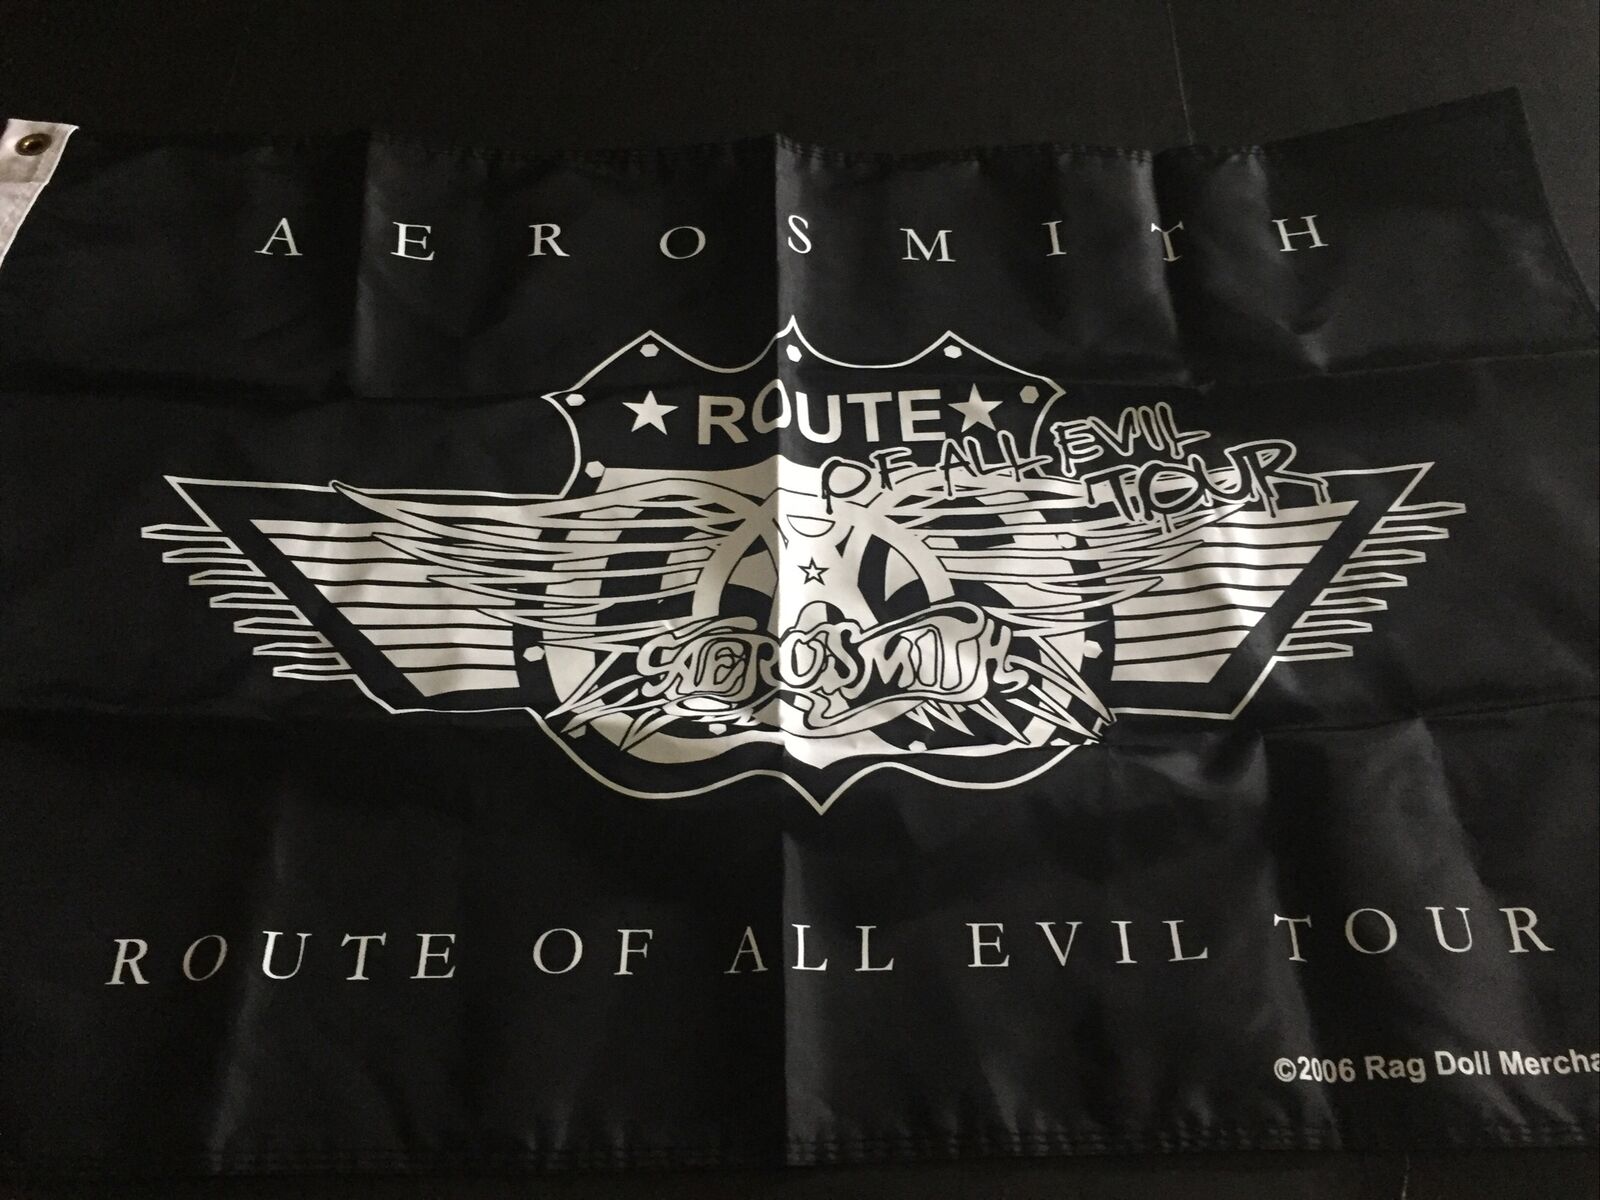 Aerosmith Route Of All Evil Tour Flag 24x36,2006 Rag Doll